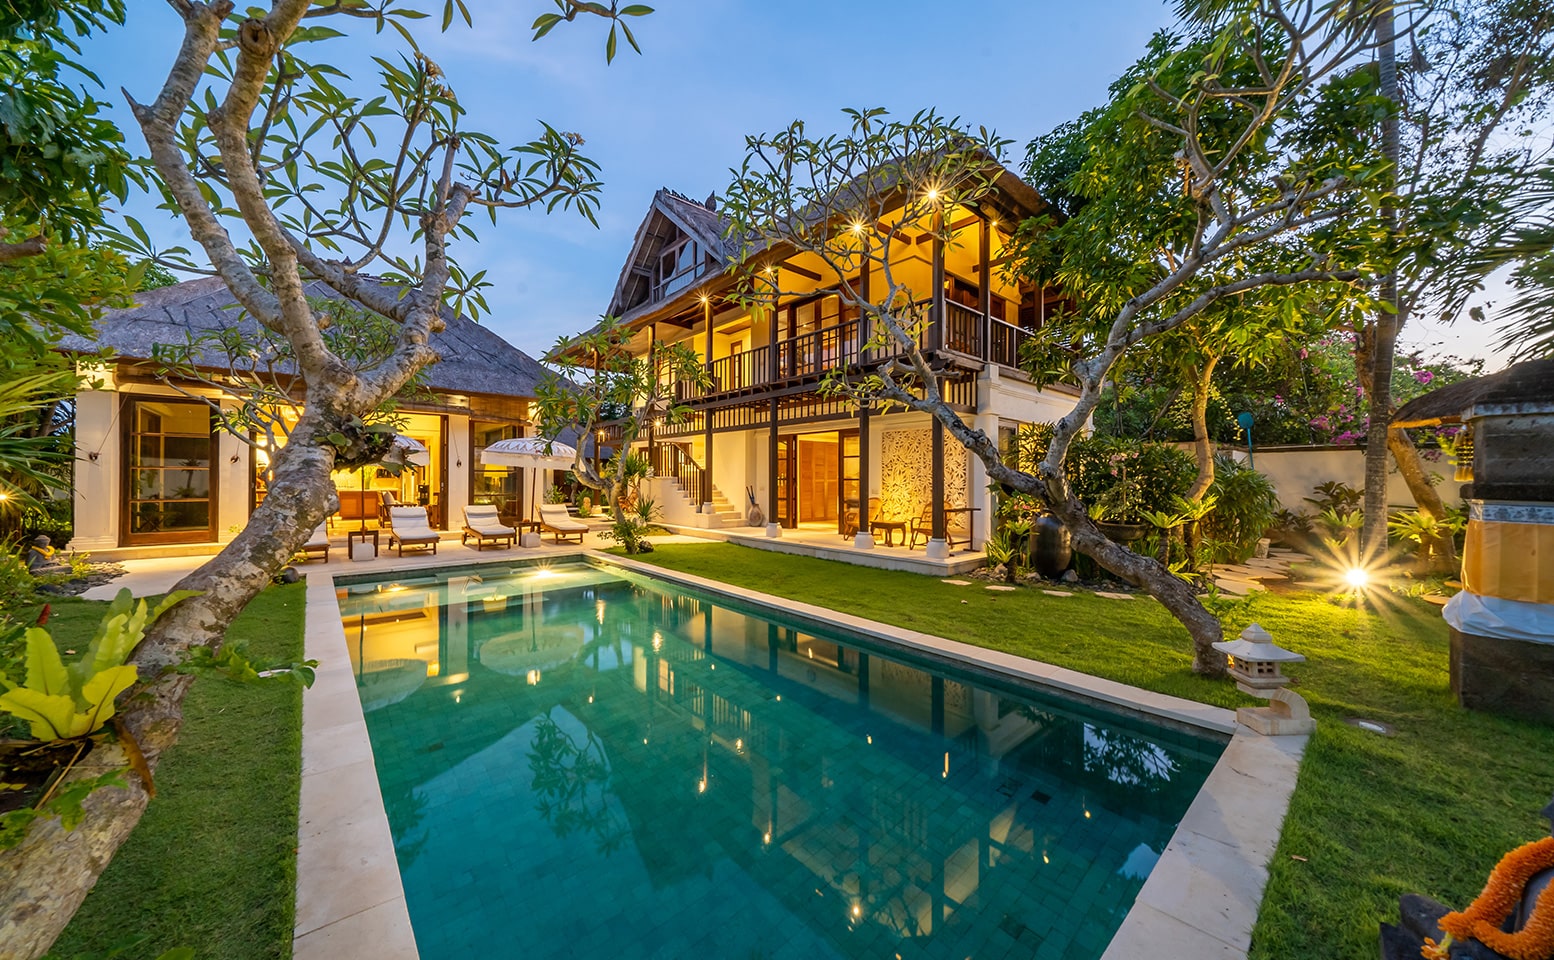 Villa Yasmine Bali - pool and frangipani at garden